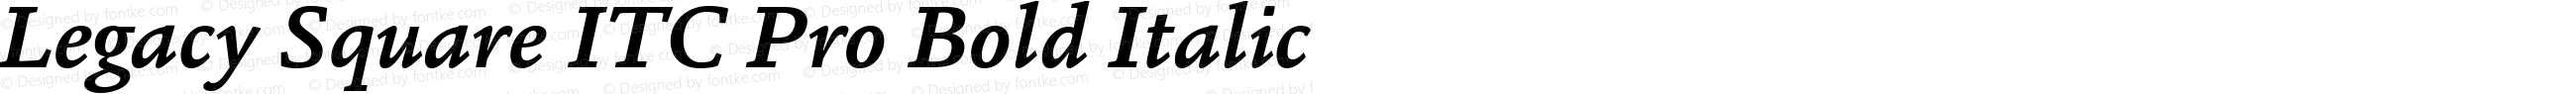 Legacy Square ITC Pro Bold Italic